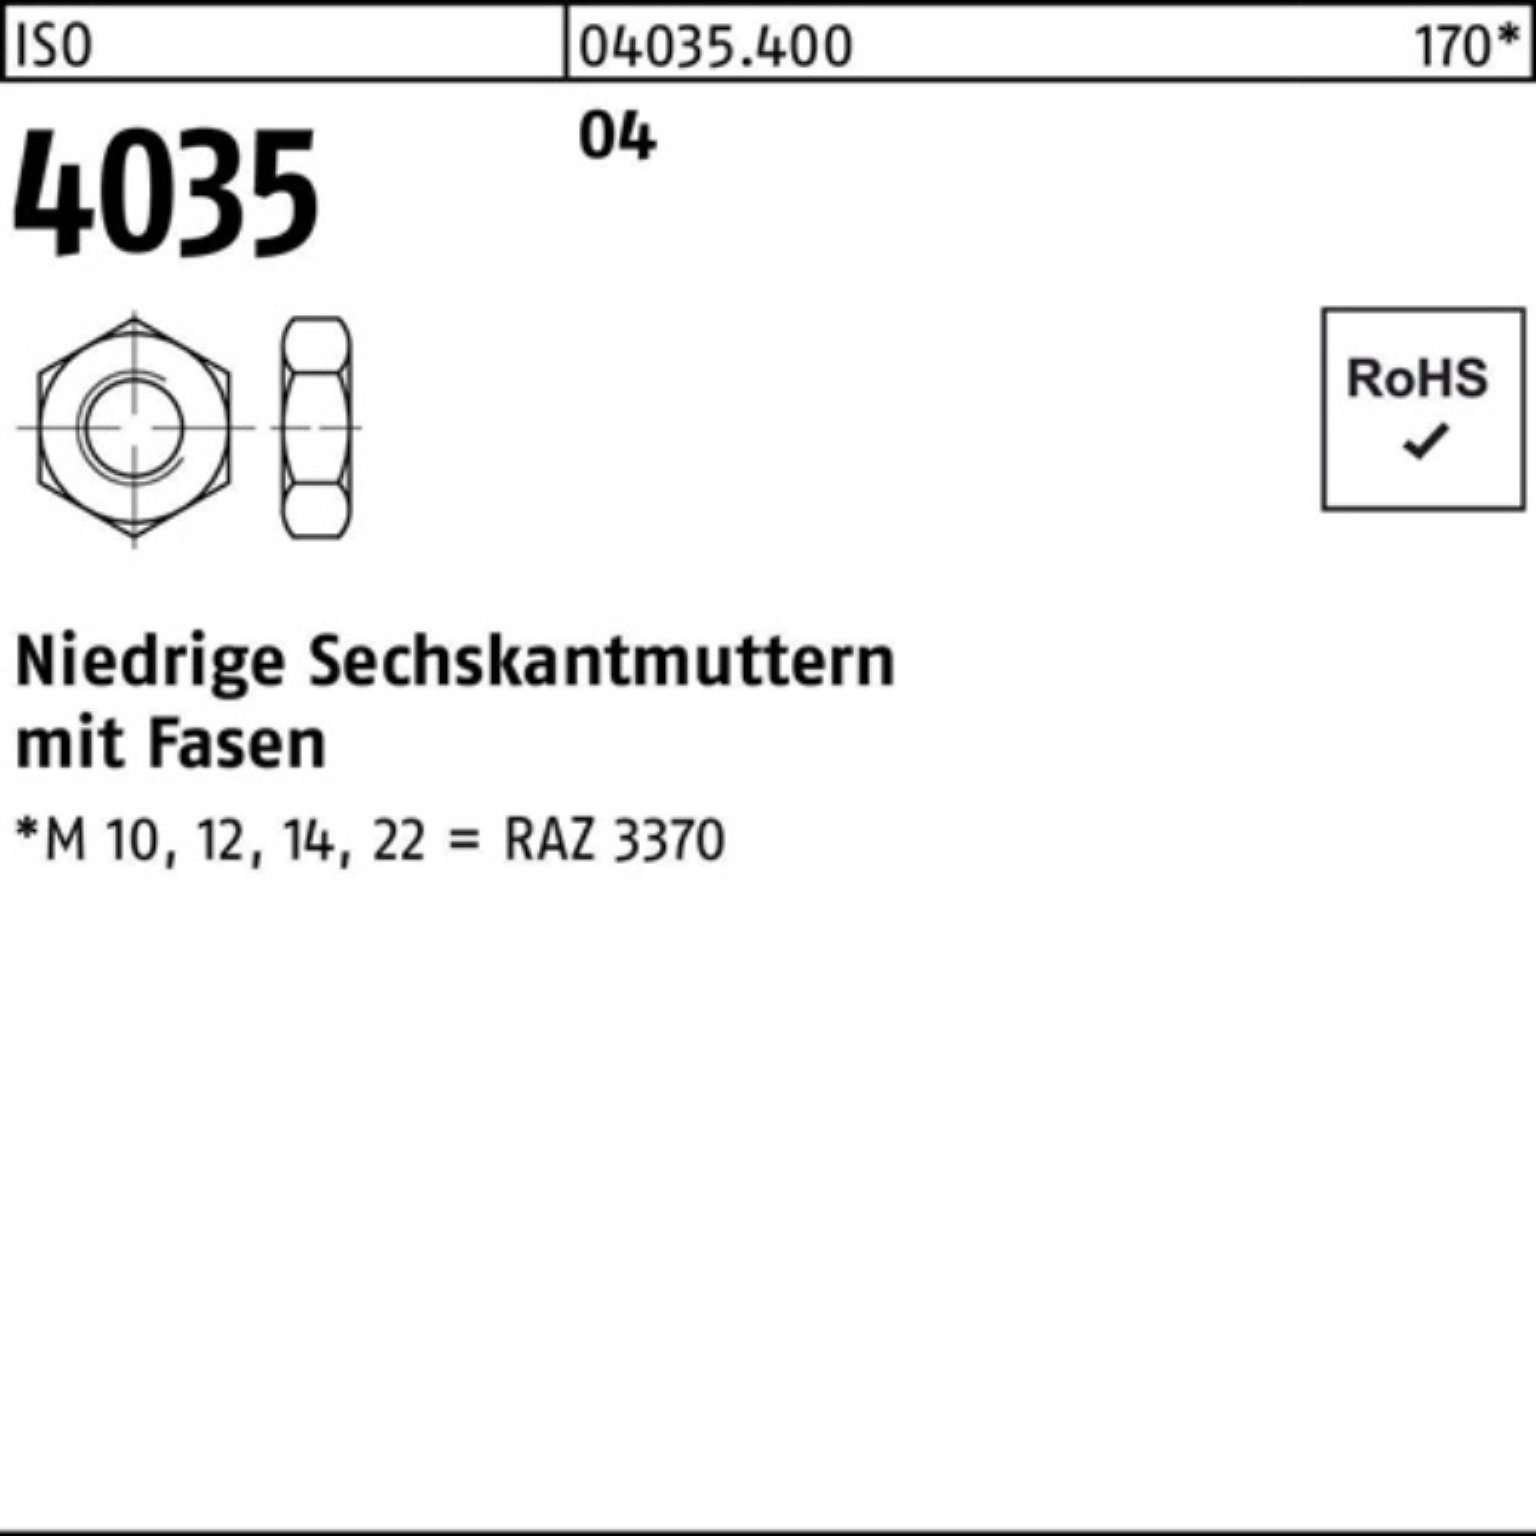 Sechskantmutter Pack Fasen Automatenstahl Muttern 1 M4 niedrig 1000er 4035 ISO Reyher